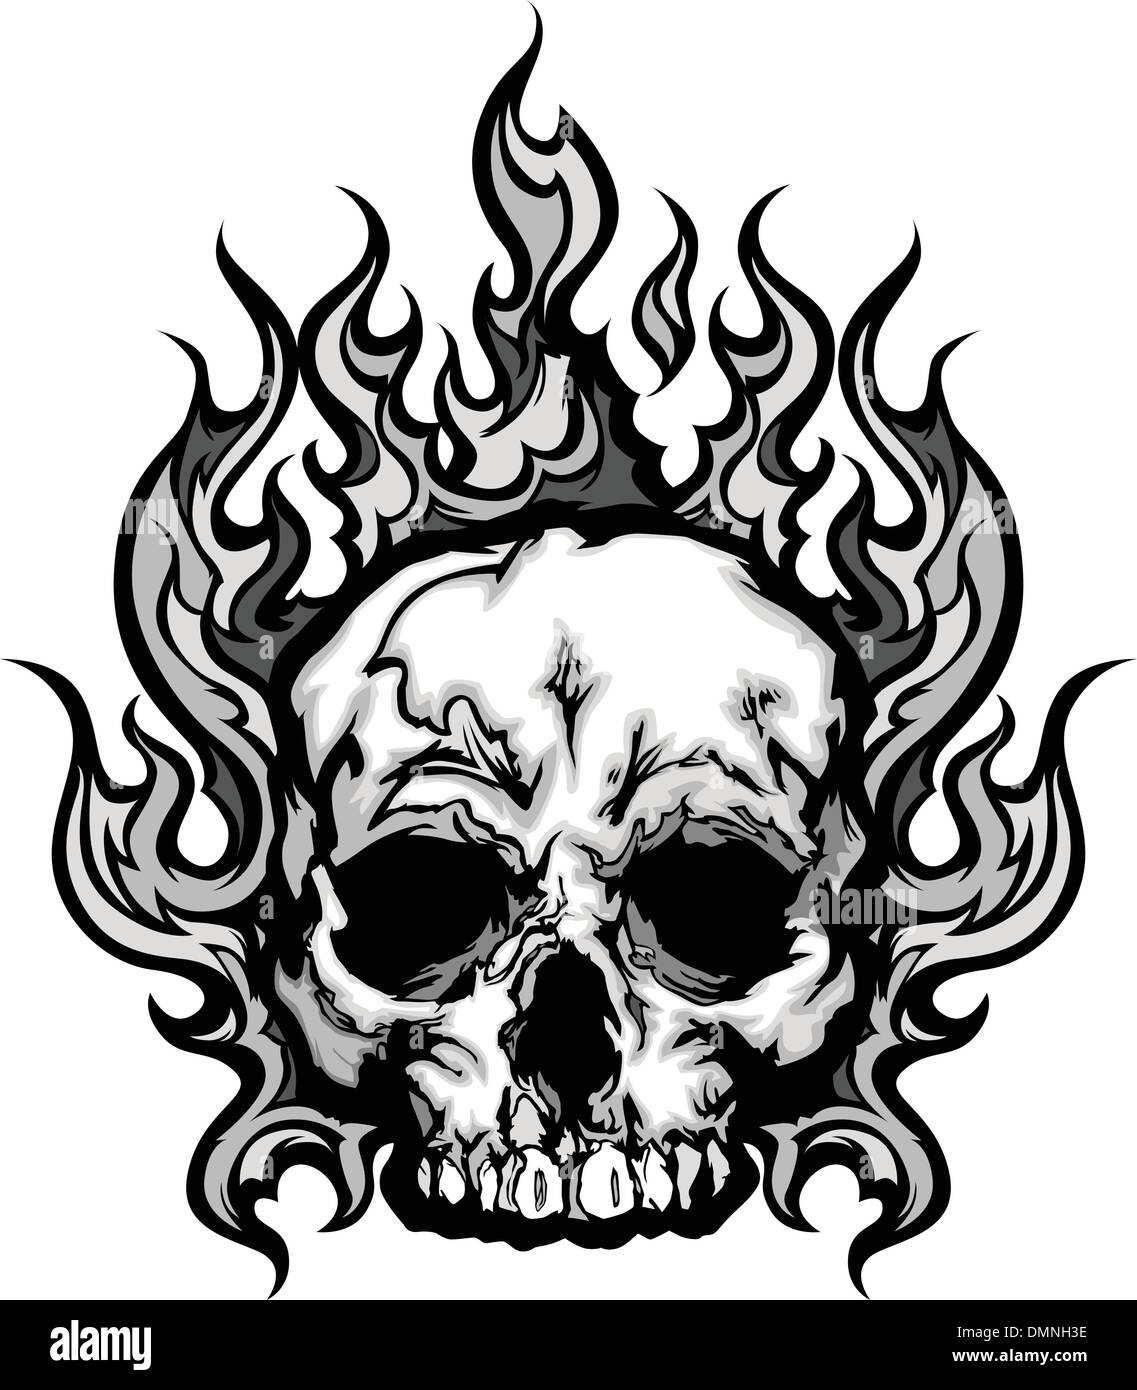 Drake's New “Unruly” Flaming Skull Tattoo Inspired by Popcaan- PopStarTats